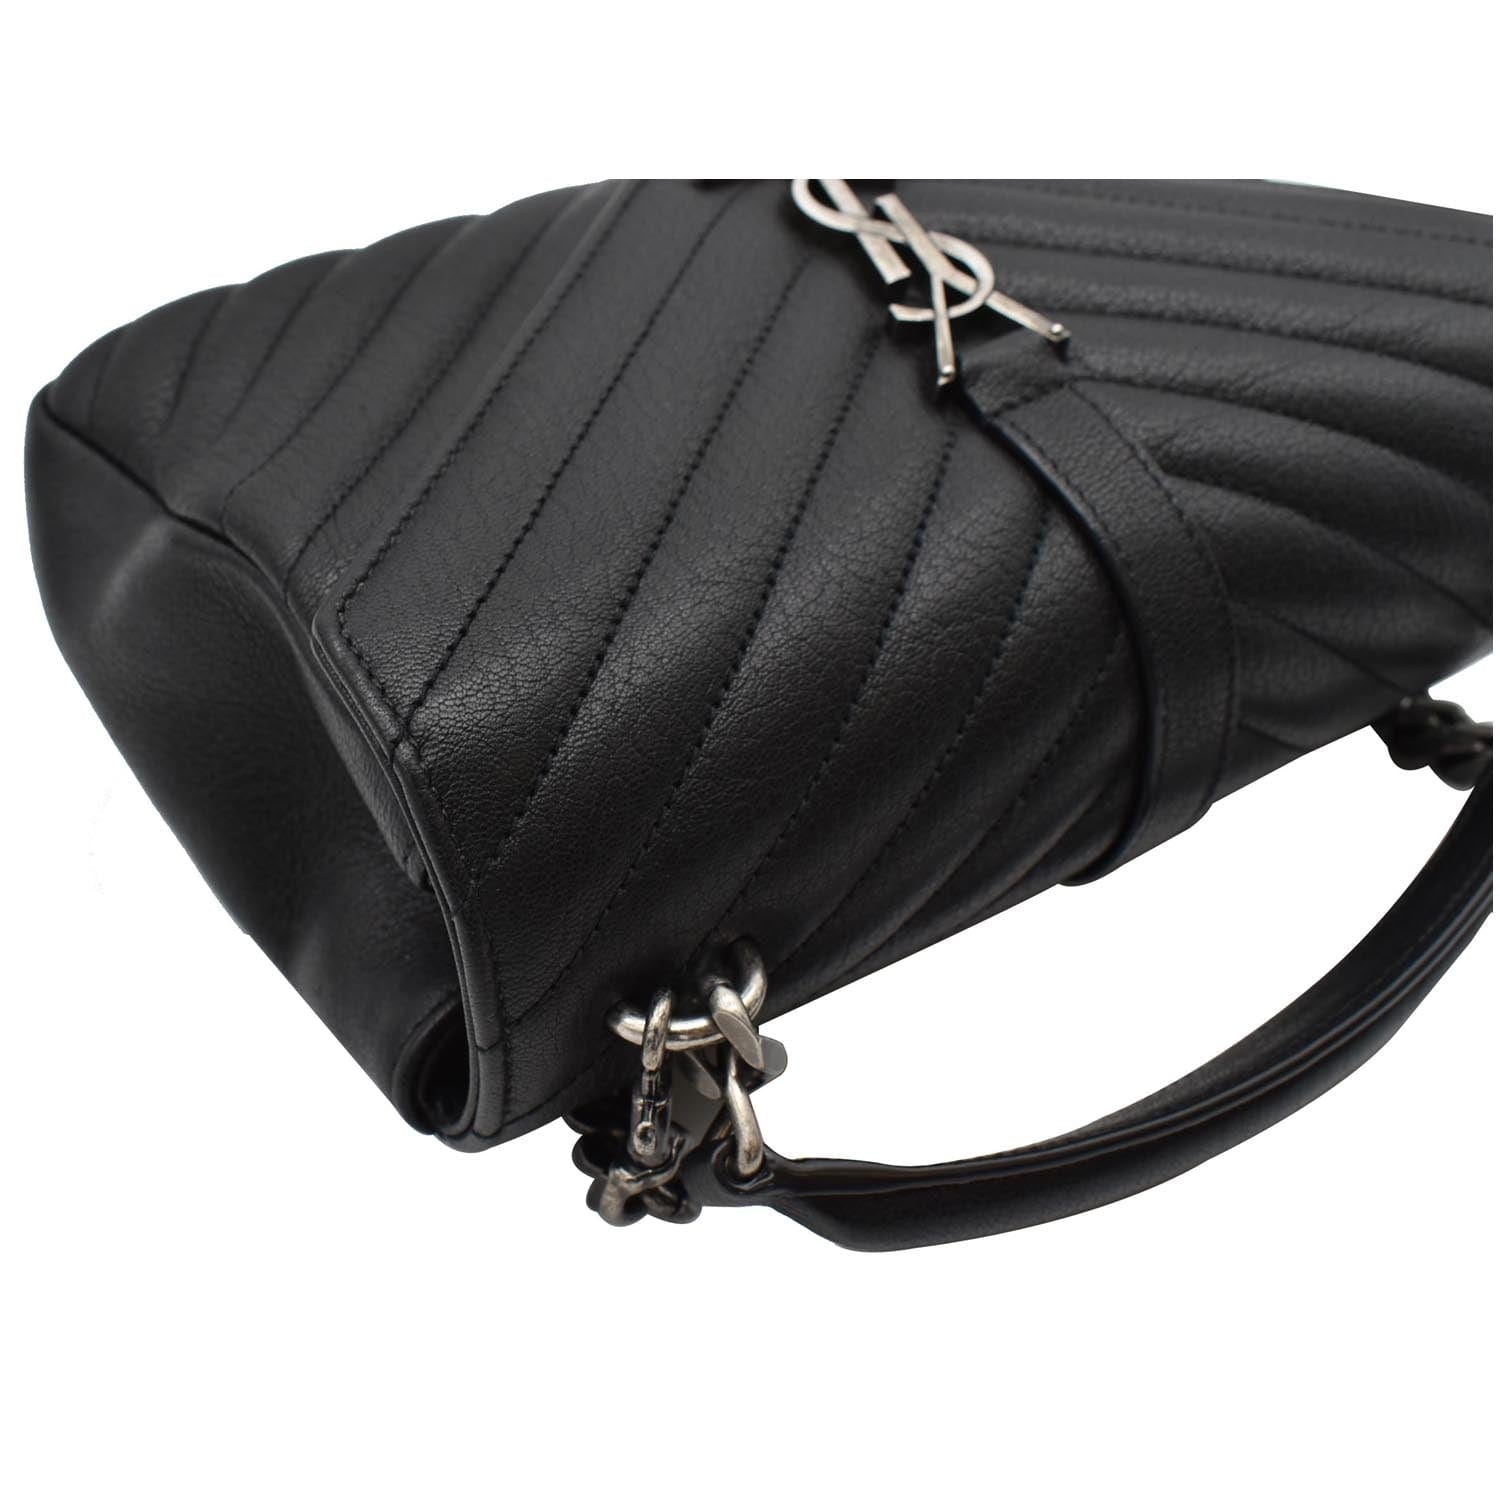 Saint Laurent Monogram Chevron-quilted Leather Cross-body Bag in Black